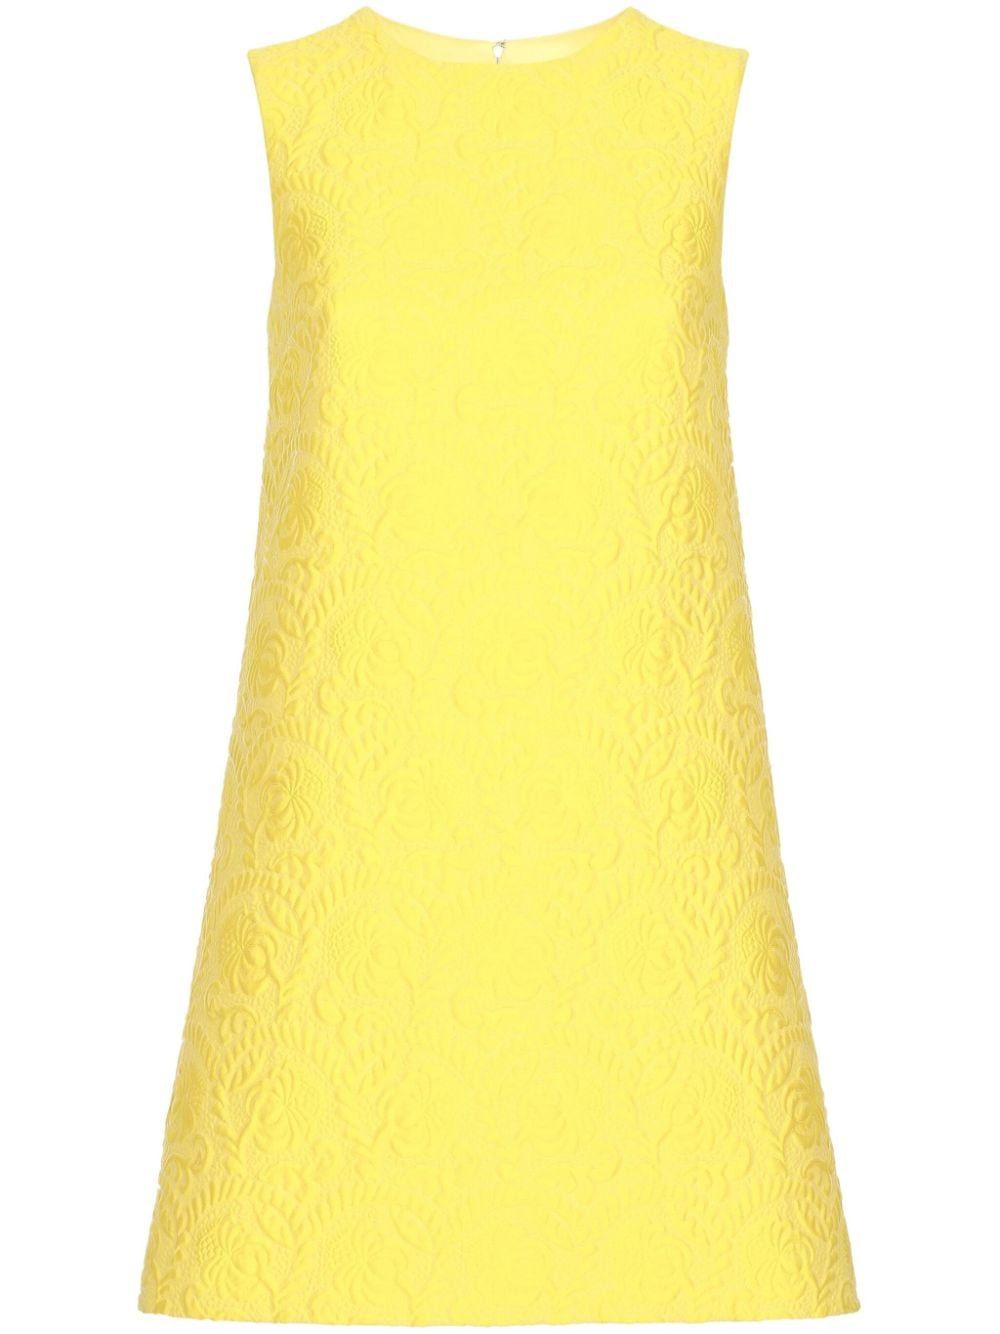 DOLCE & GABBANA Yellow Jacquard Floral Mini Dress for Women